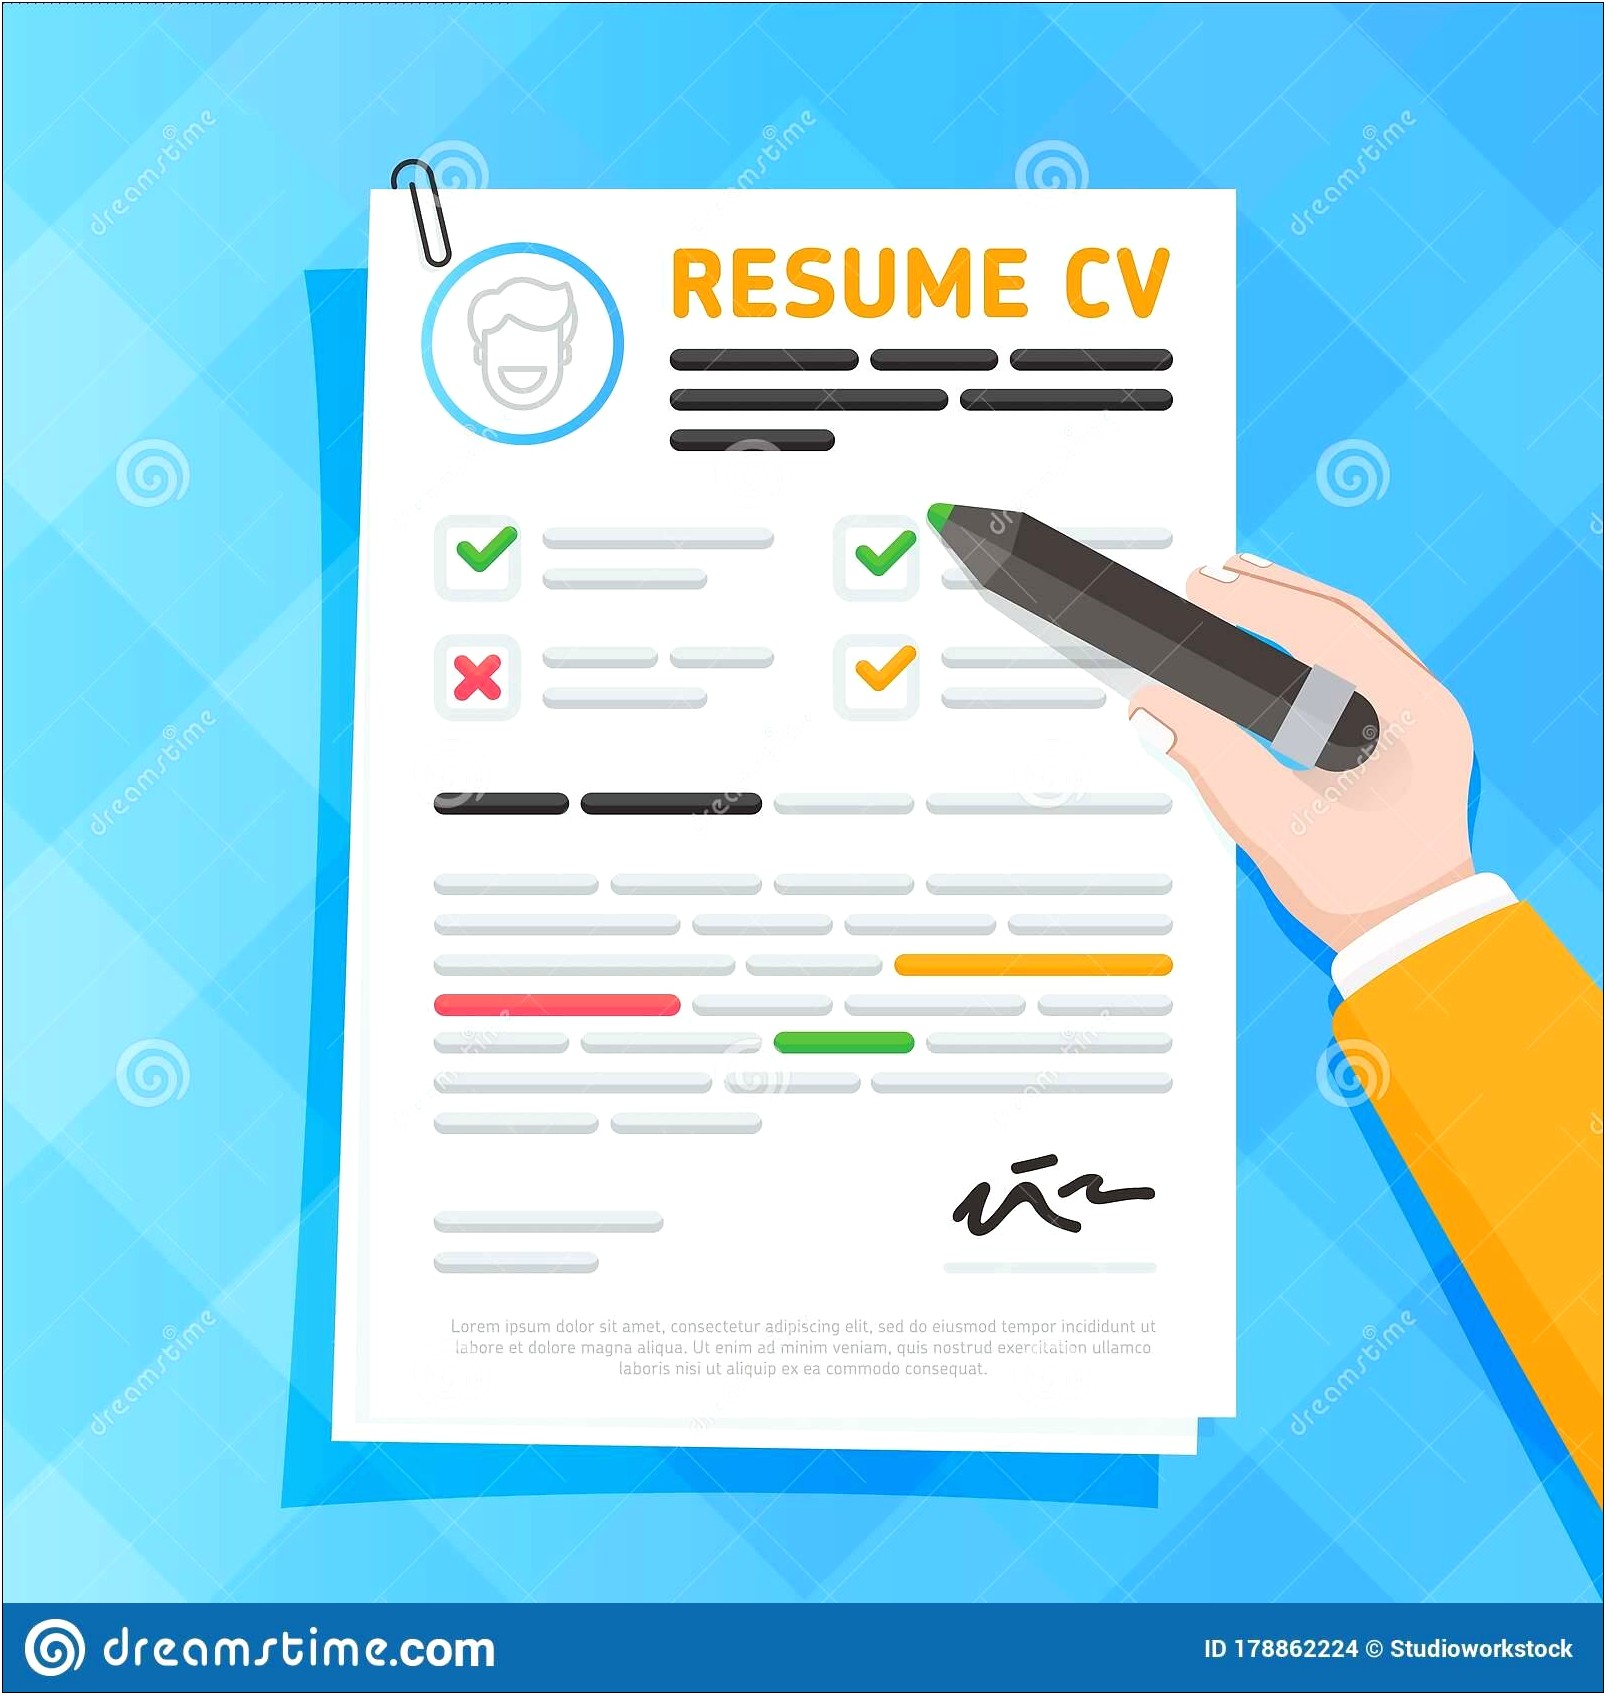 Sample Resume With Az Licenses